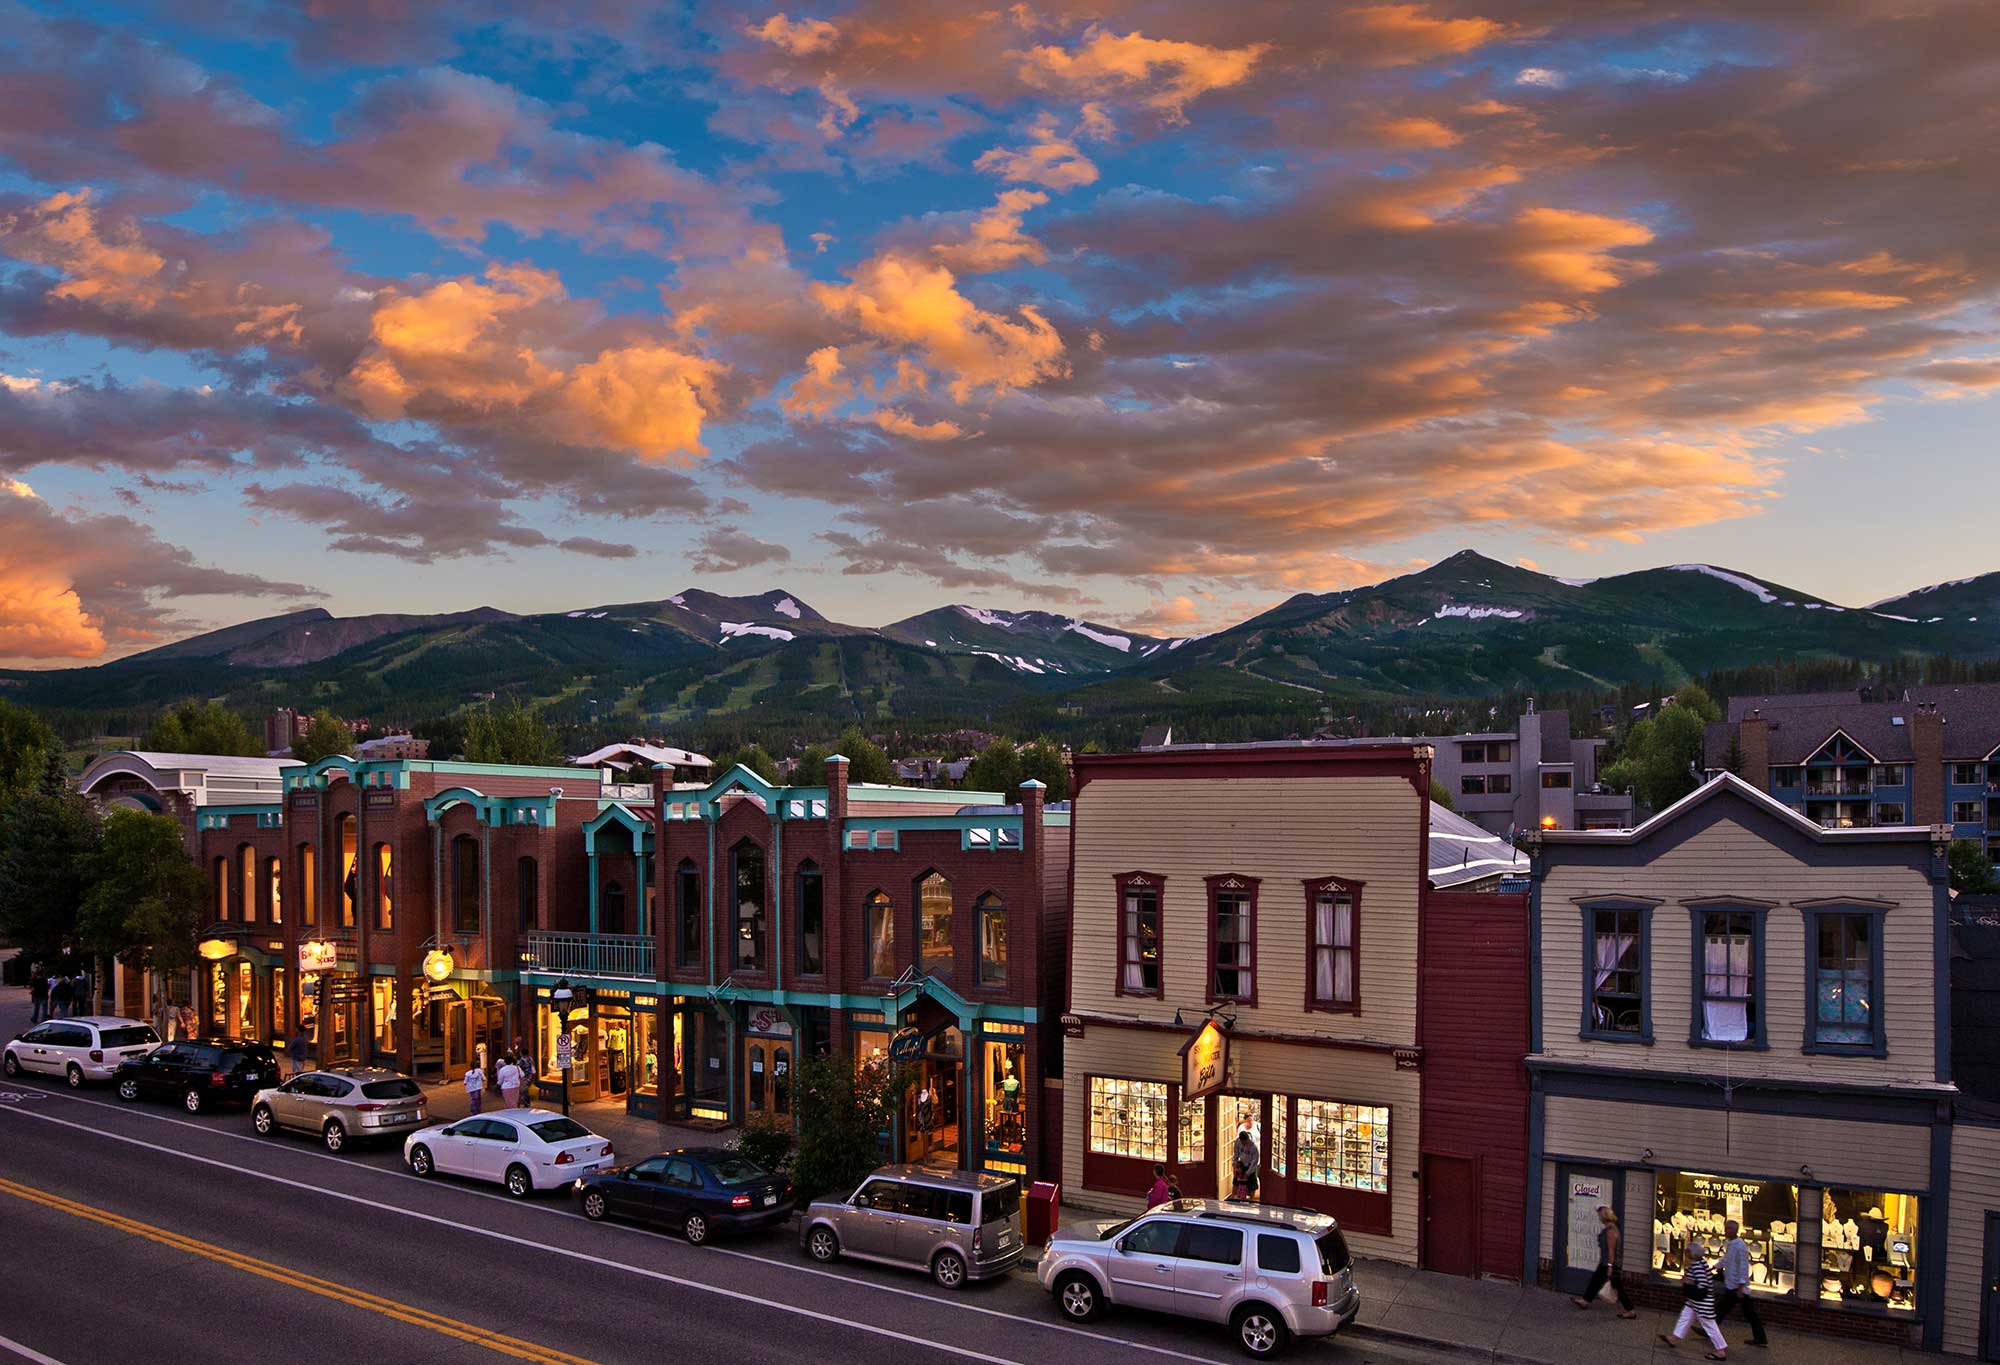 Explore the Prospects of Breckenridge, Colorado Senior Travel Tales